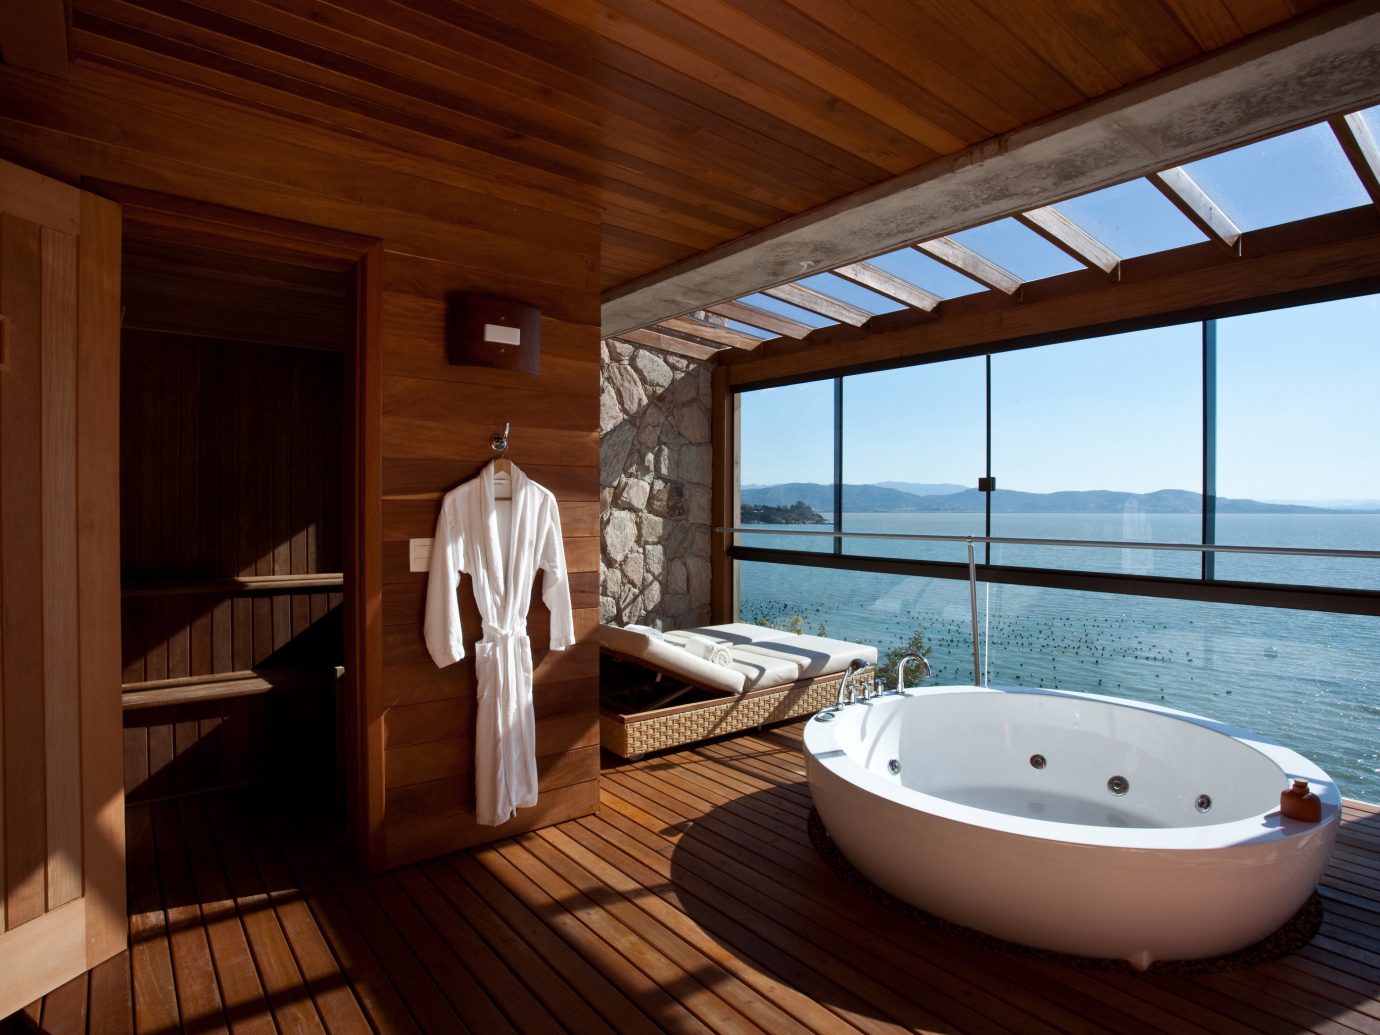 Hotels indoor ceiling floor window room swimming pool building counter sink estate jacuzzi cottage tub bathtub